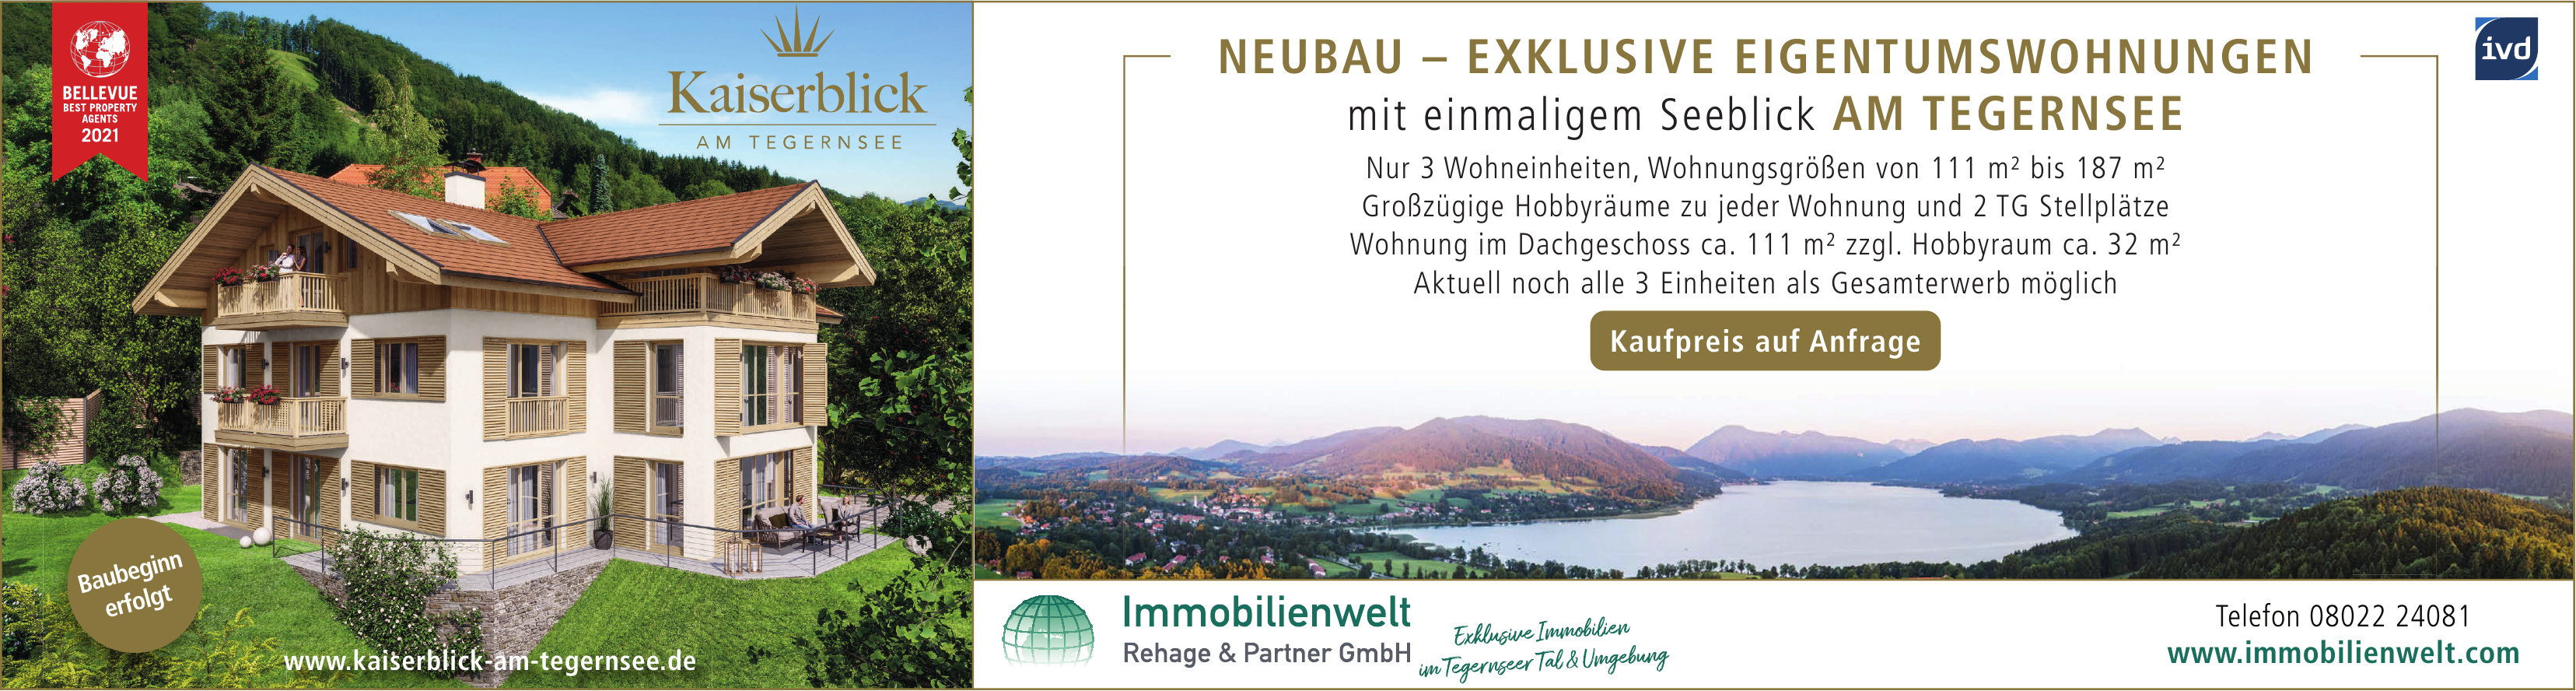 Immobilienwelt Rehage & Partner GmbH